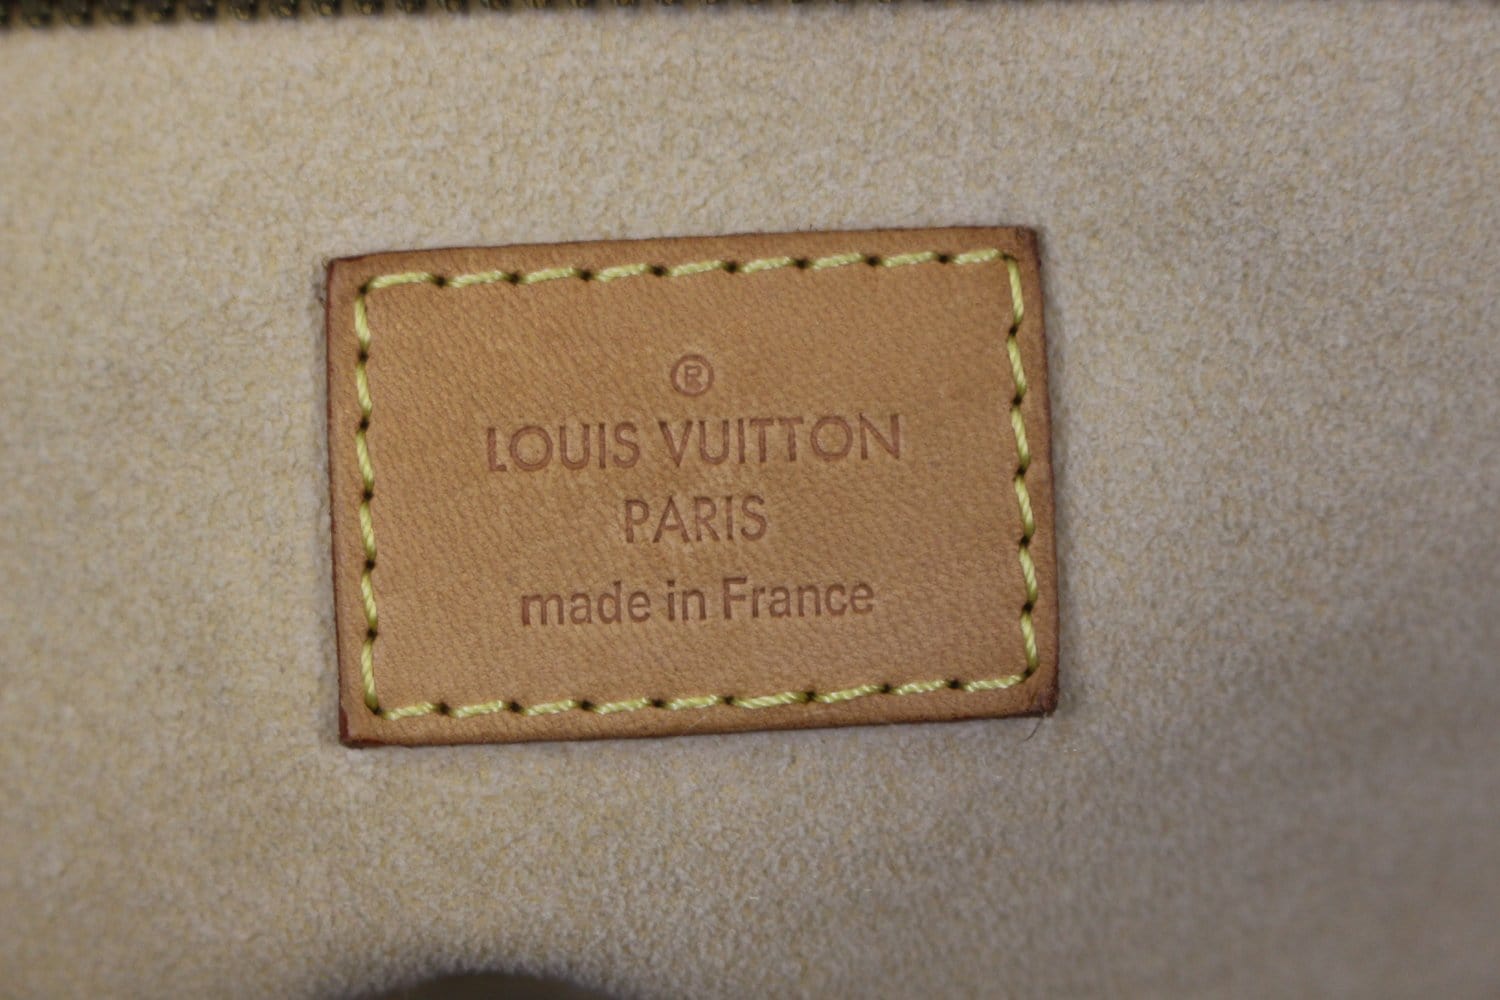 Estrela Gm Monogram - Paixao Por Louis Vuitton